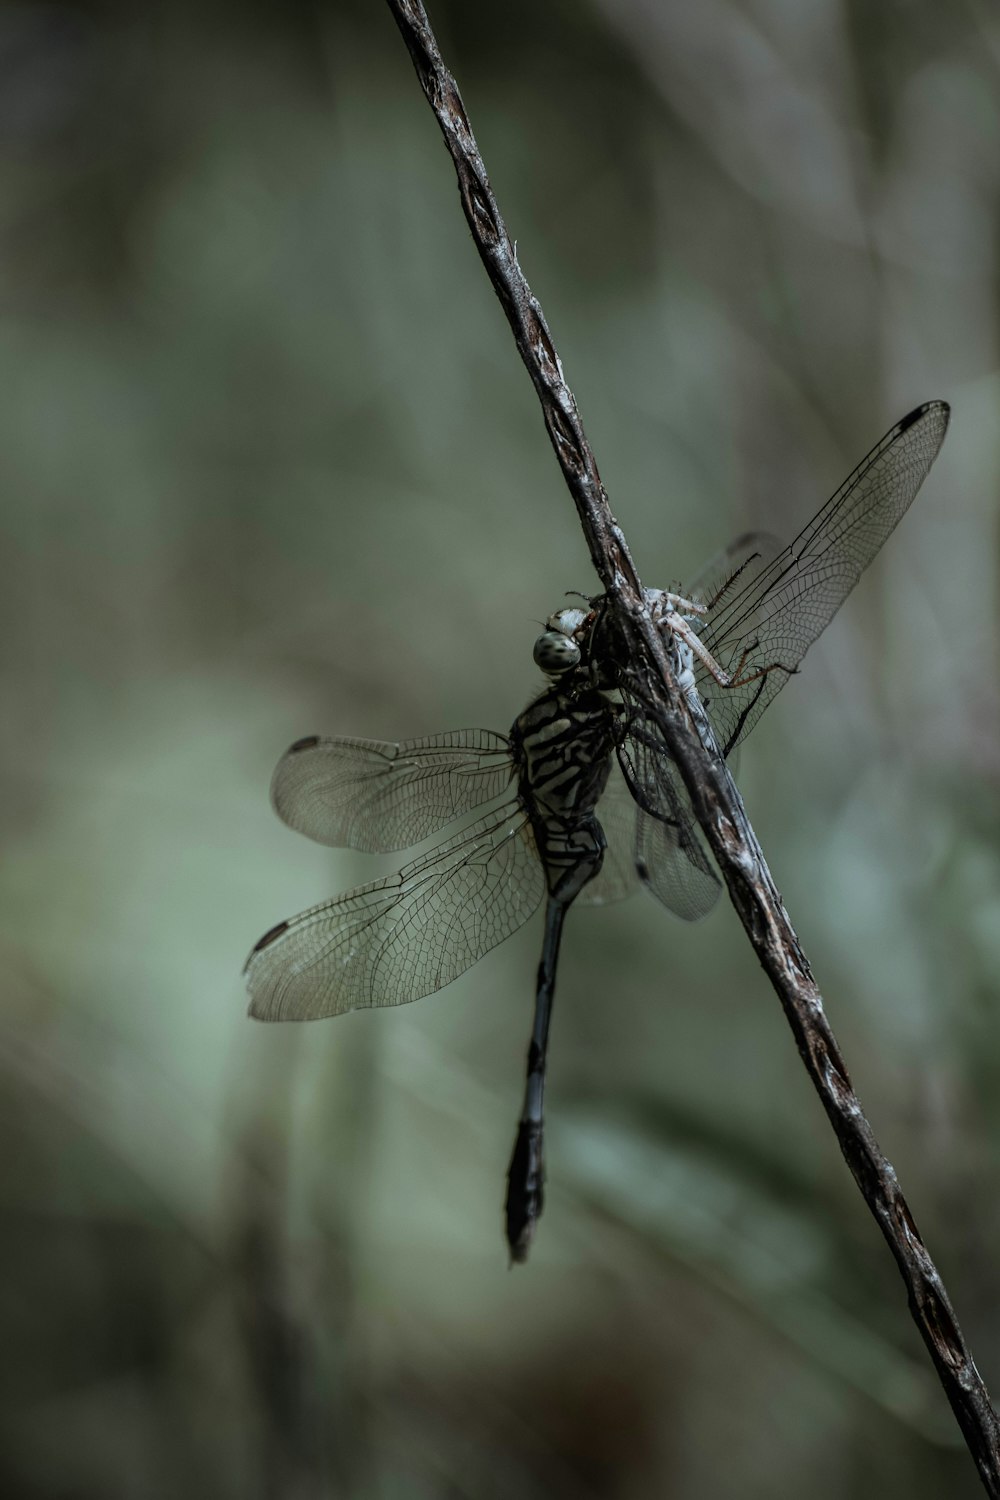 a dragonfly on a stick